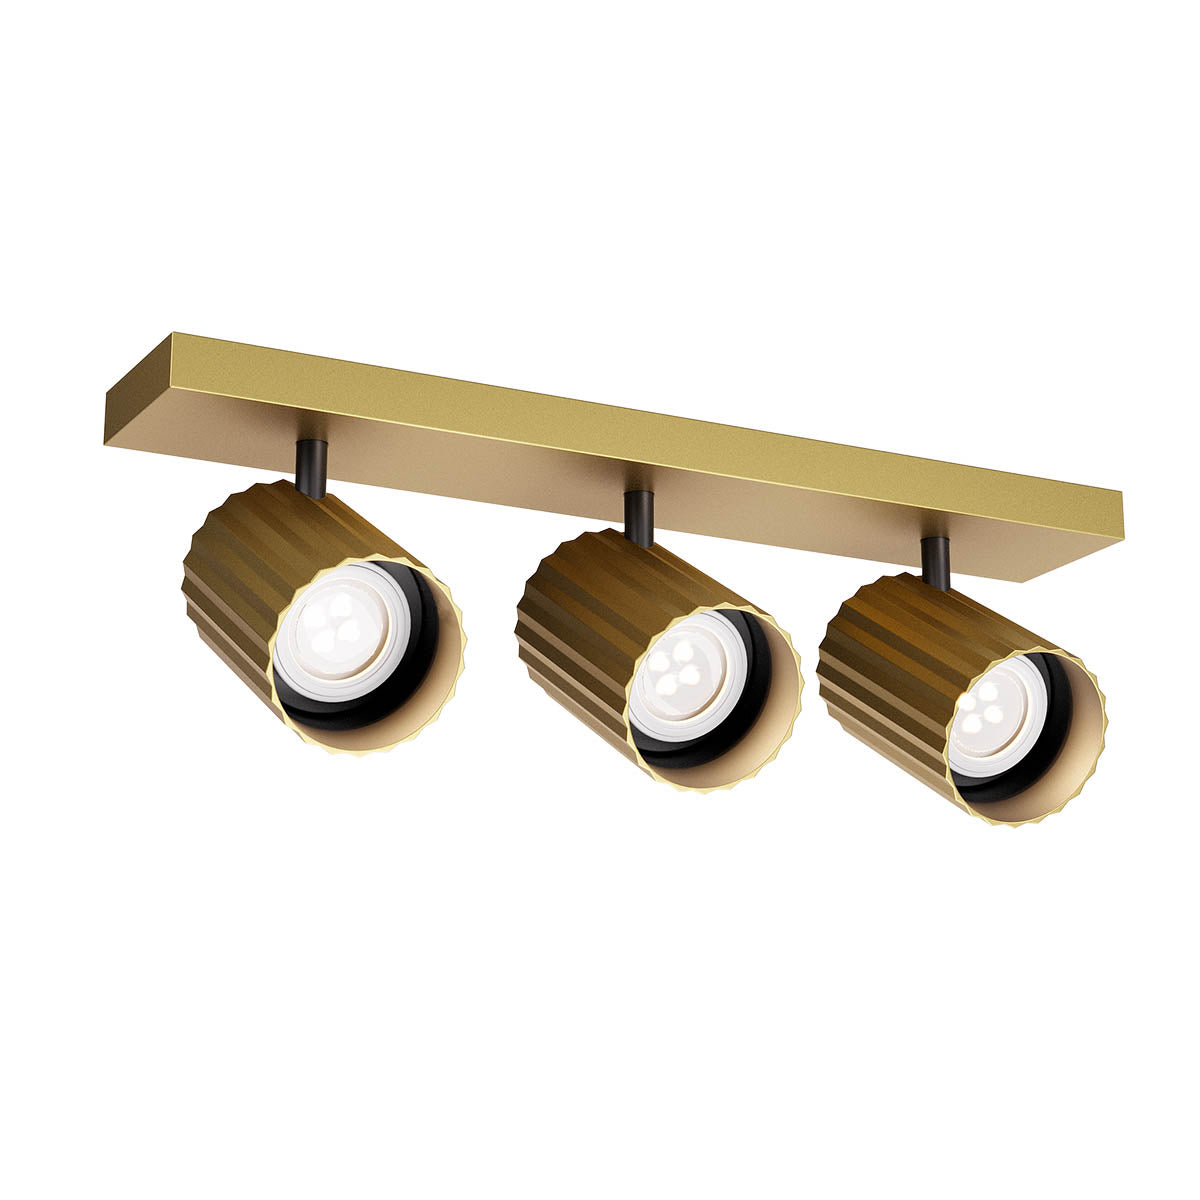 Miniproiector DELPHI, auriu mat, GU10, 3 x 7W, Redo 01-3405